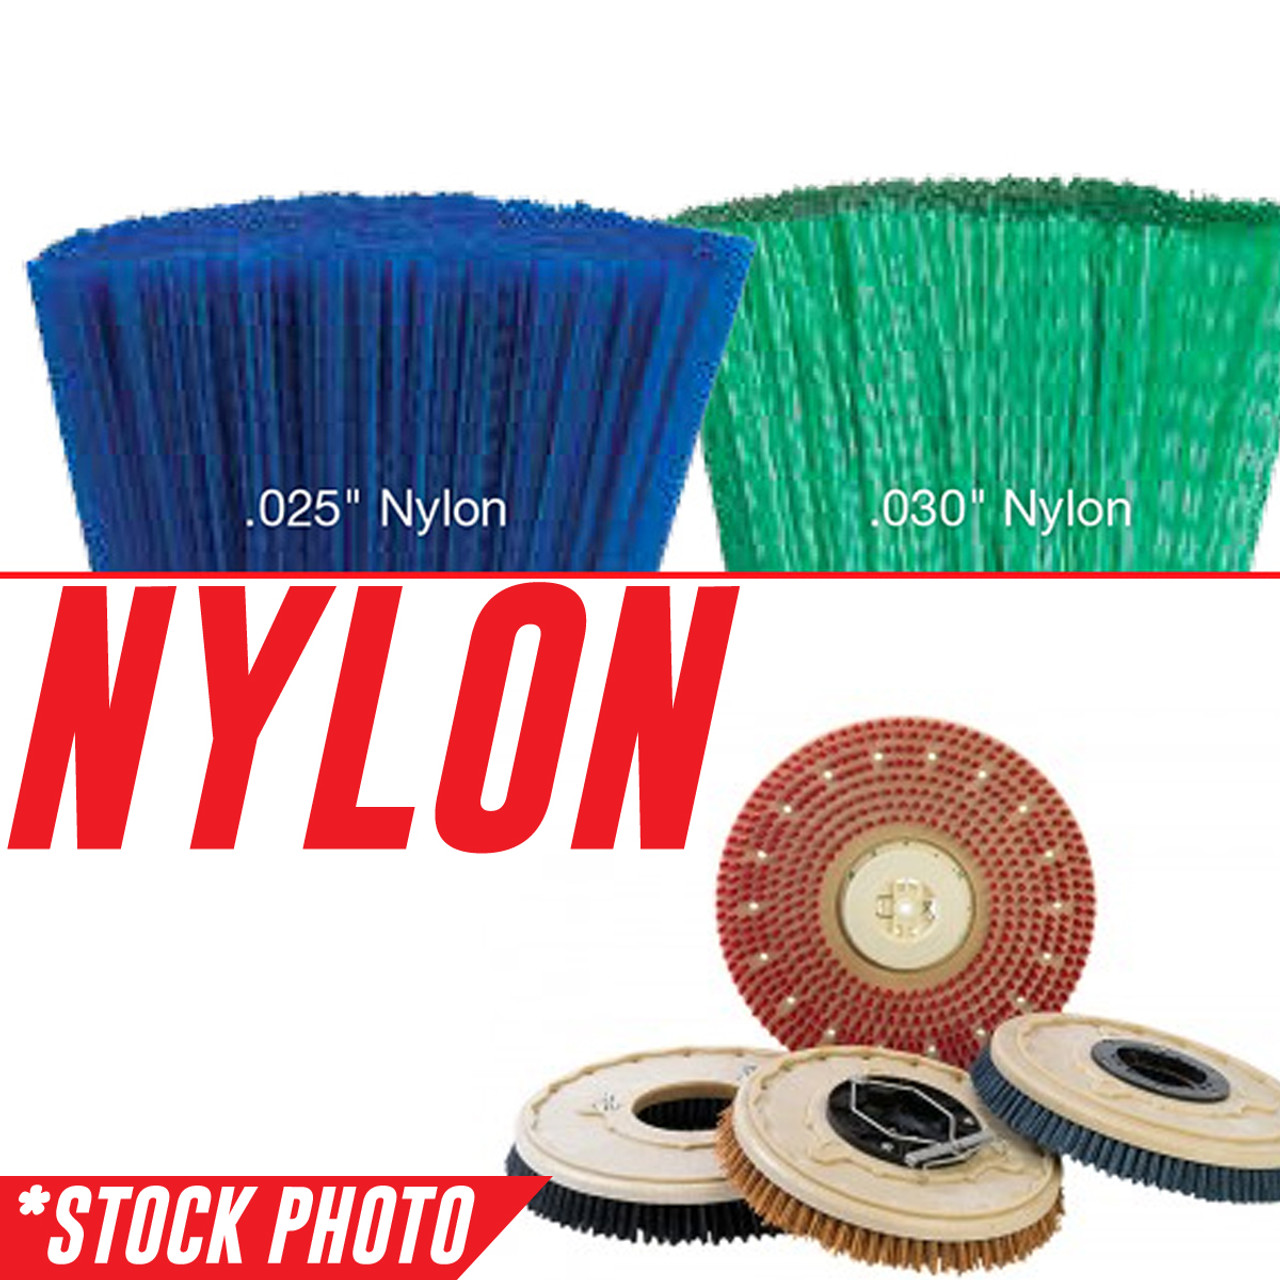 7-08-03170-1: 18" Rotary Brush .028" Medium Nylon fits American-Lincoln Models 772, 7760, 7765, 9772